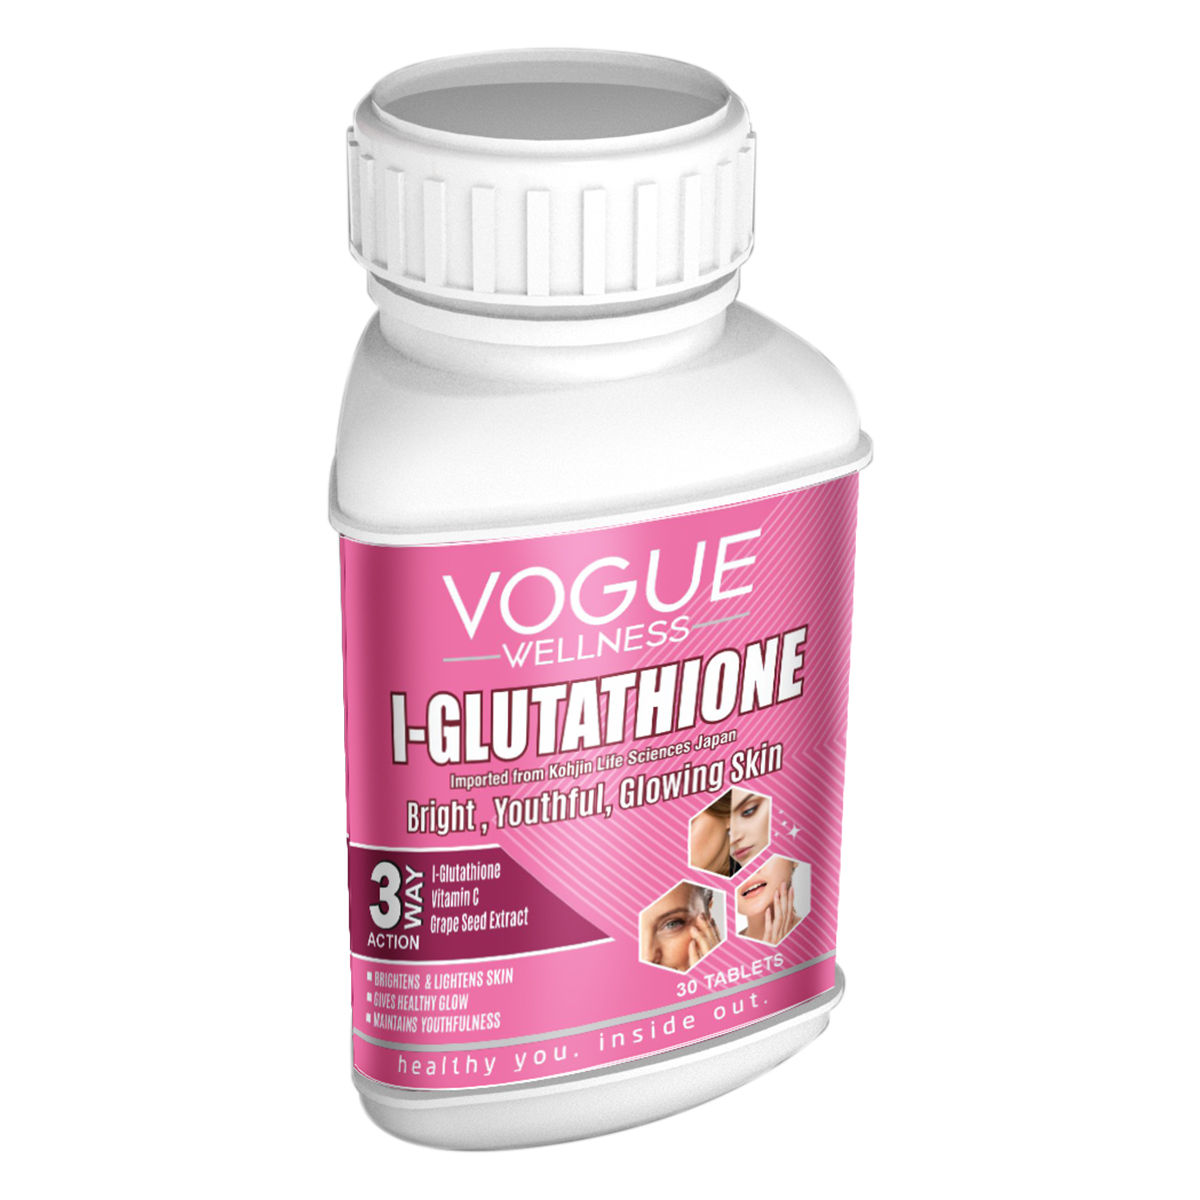 Buy Vogue Wellness L-Glutathione, 30 Tablets Online